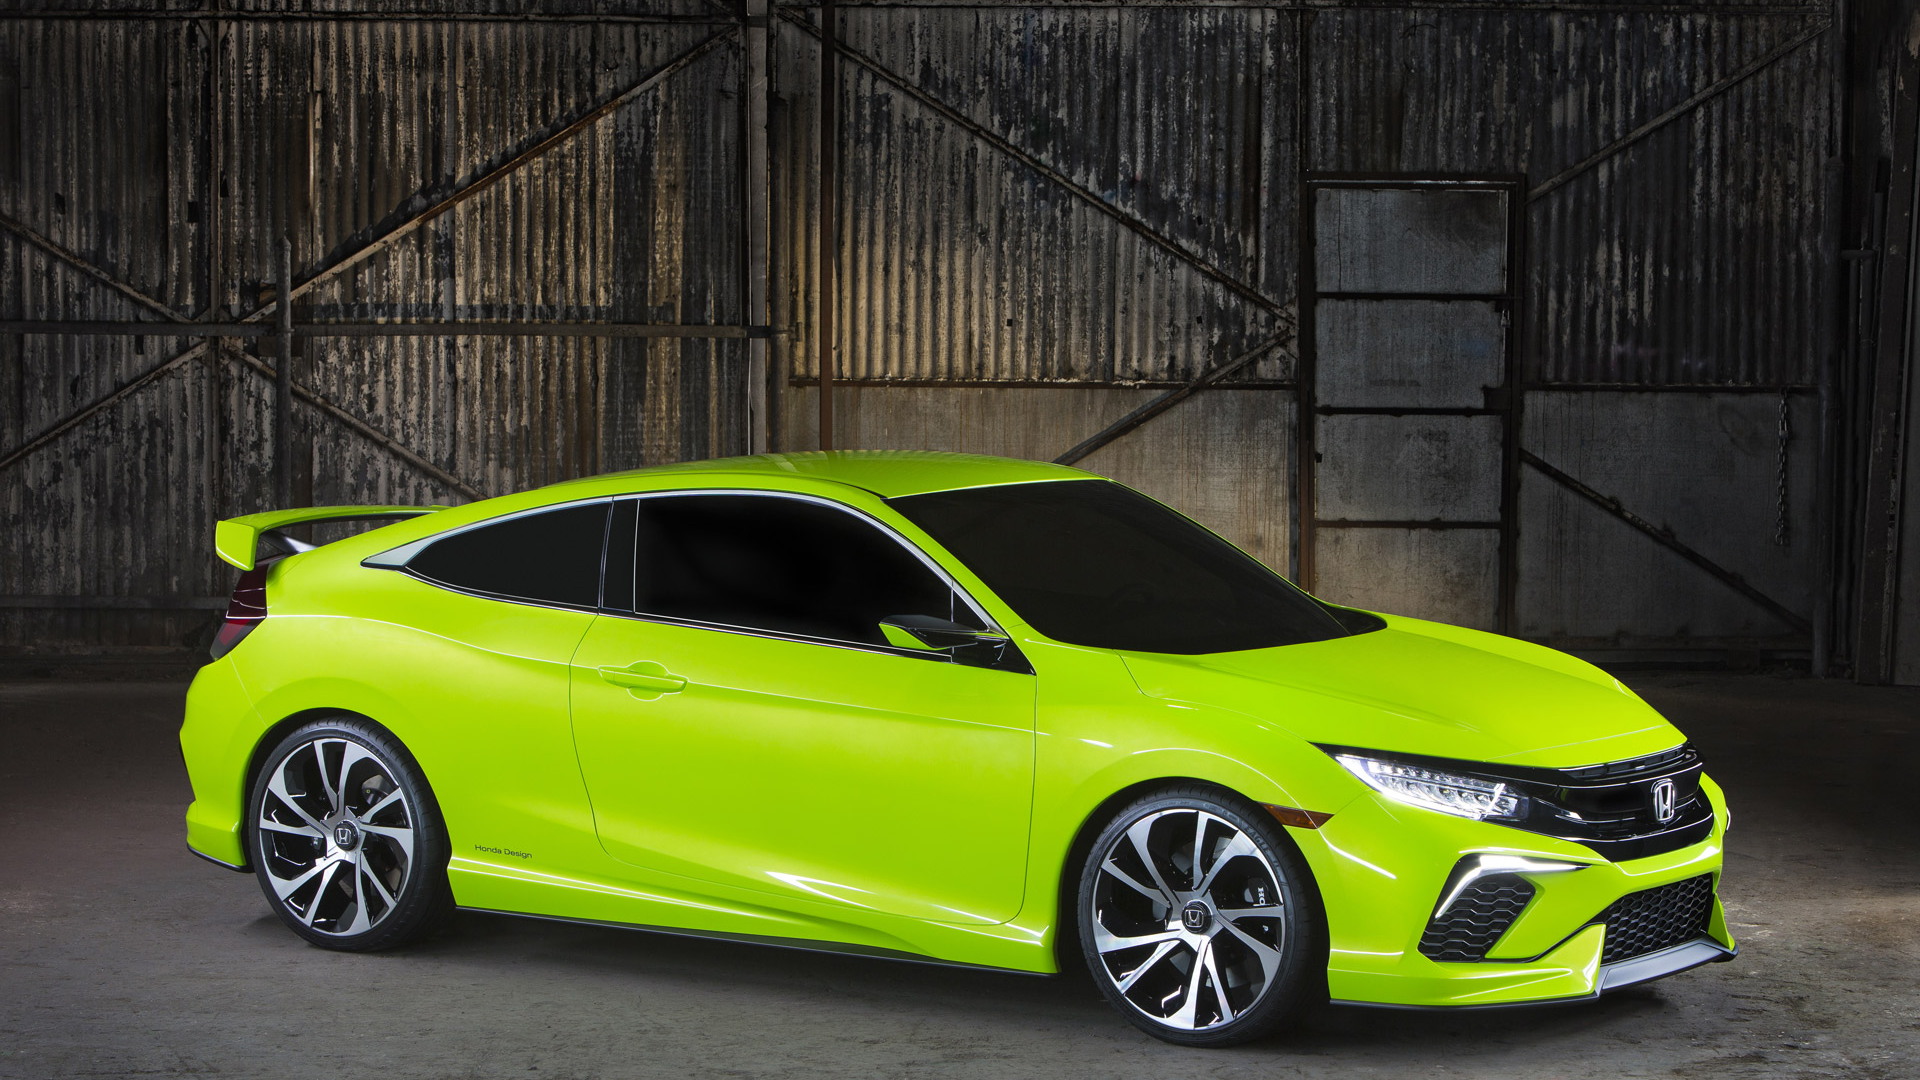 Honda Civic Concept, 2015 New York Auto Show